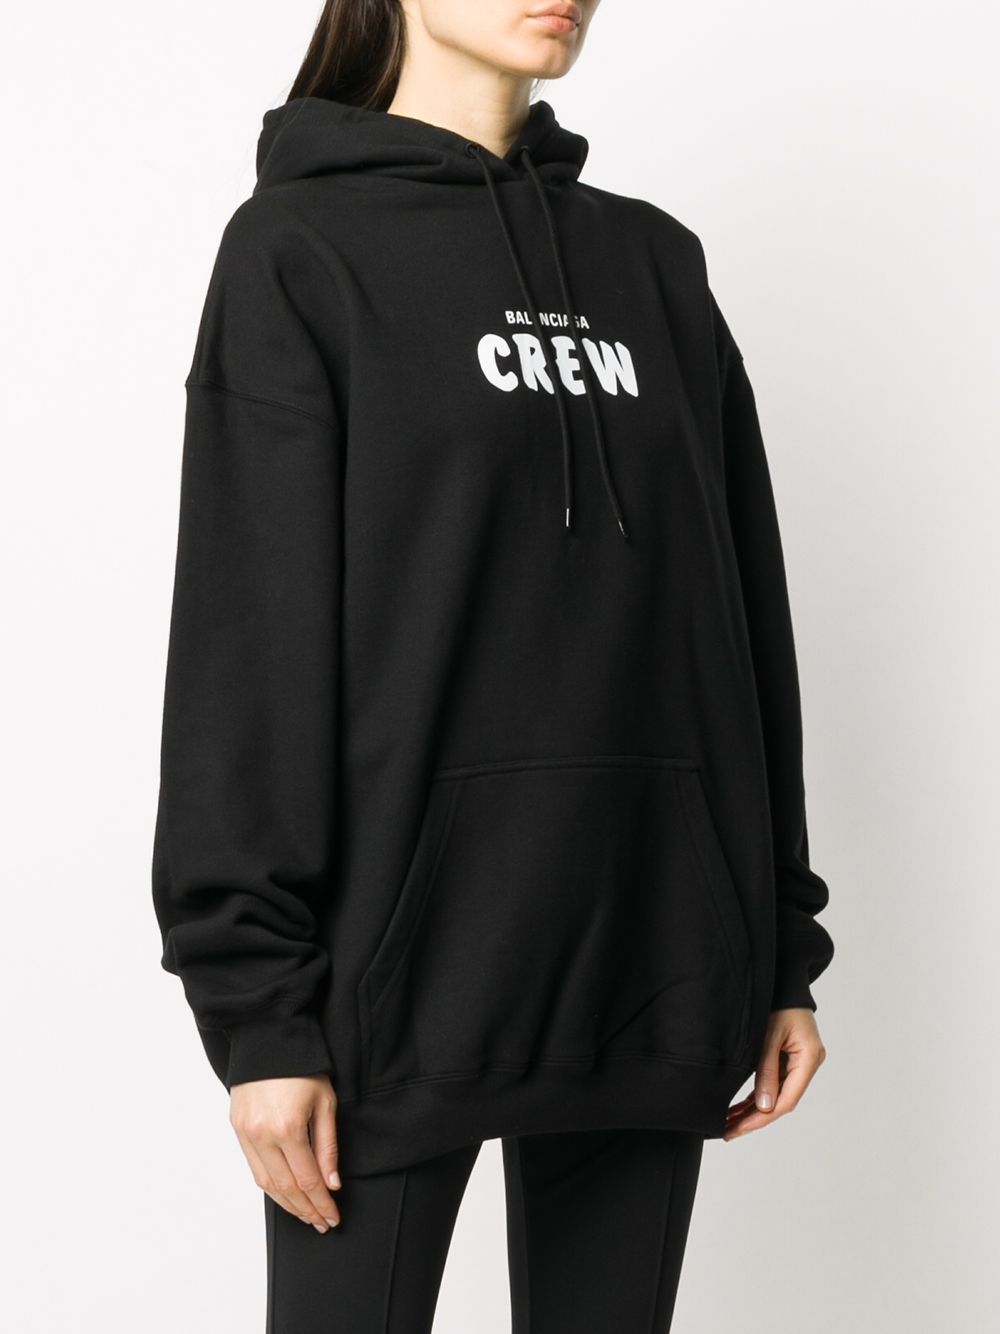 фото Balenciaga crew print oversized hoodie